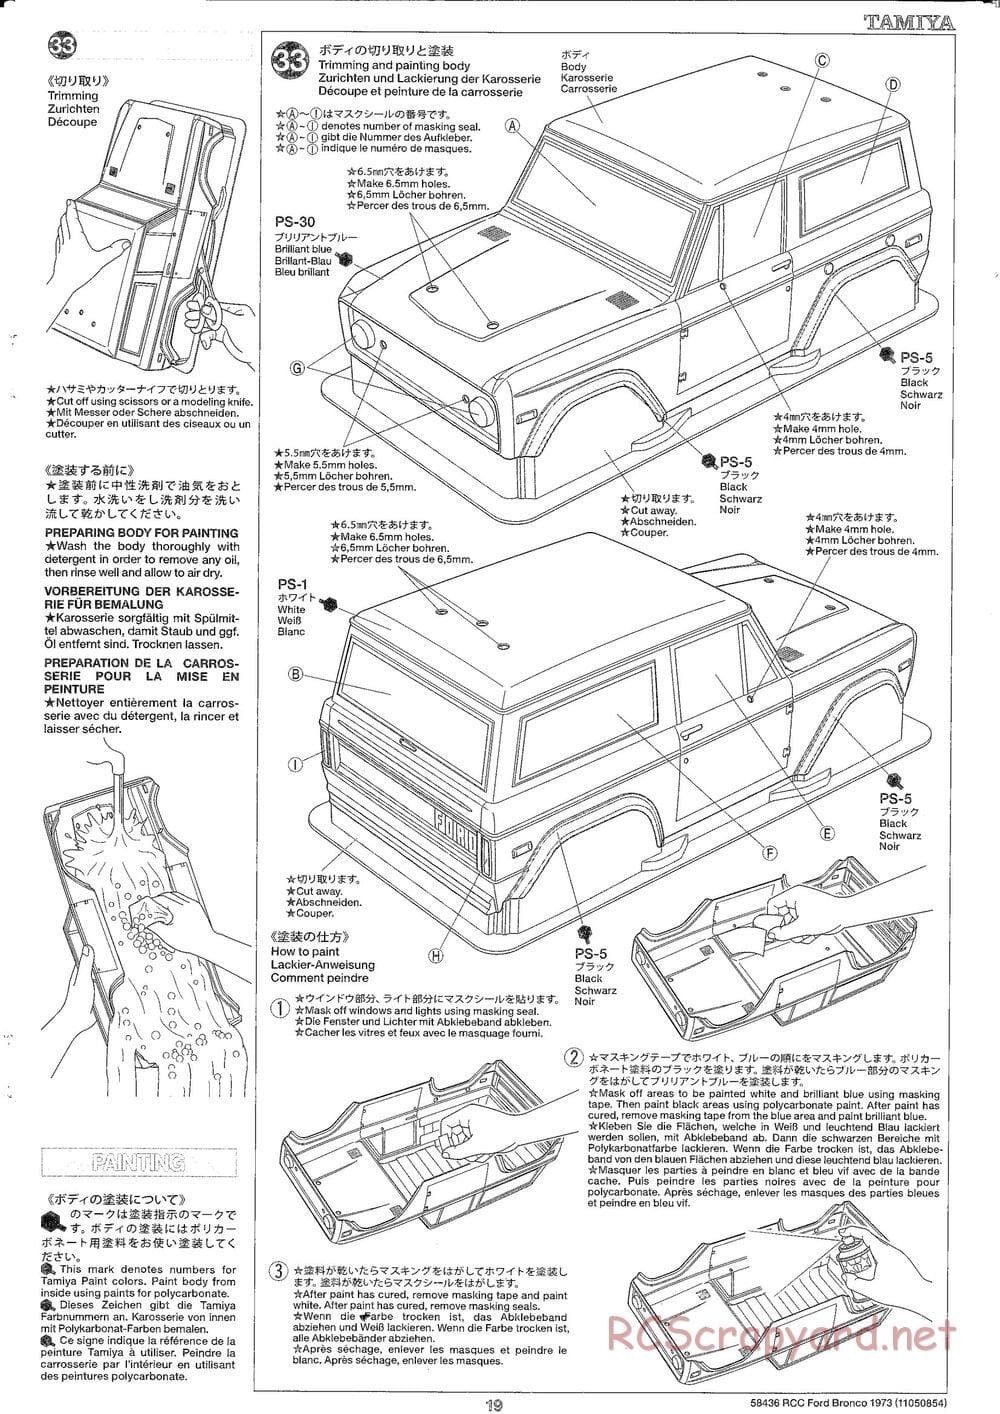 Tamiya - Ford Bronco 1973 - CR-01 Chassis - Manual - Page 19